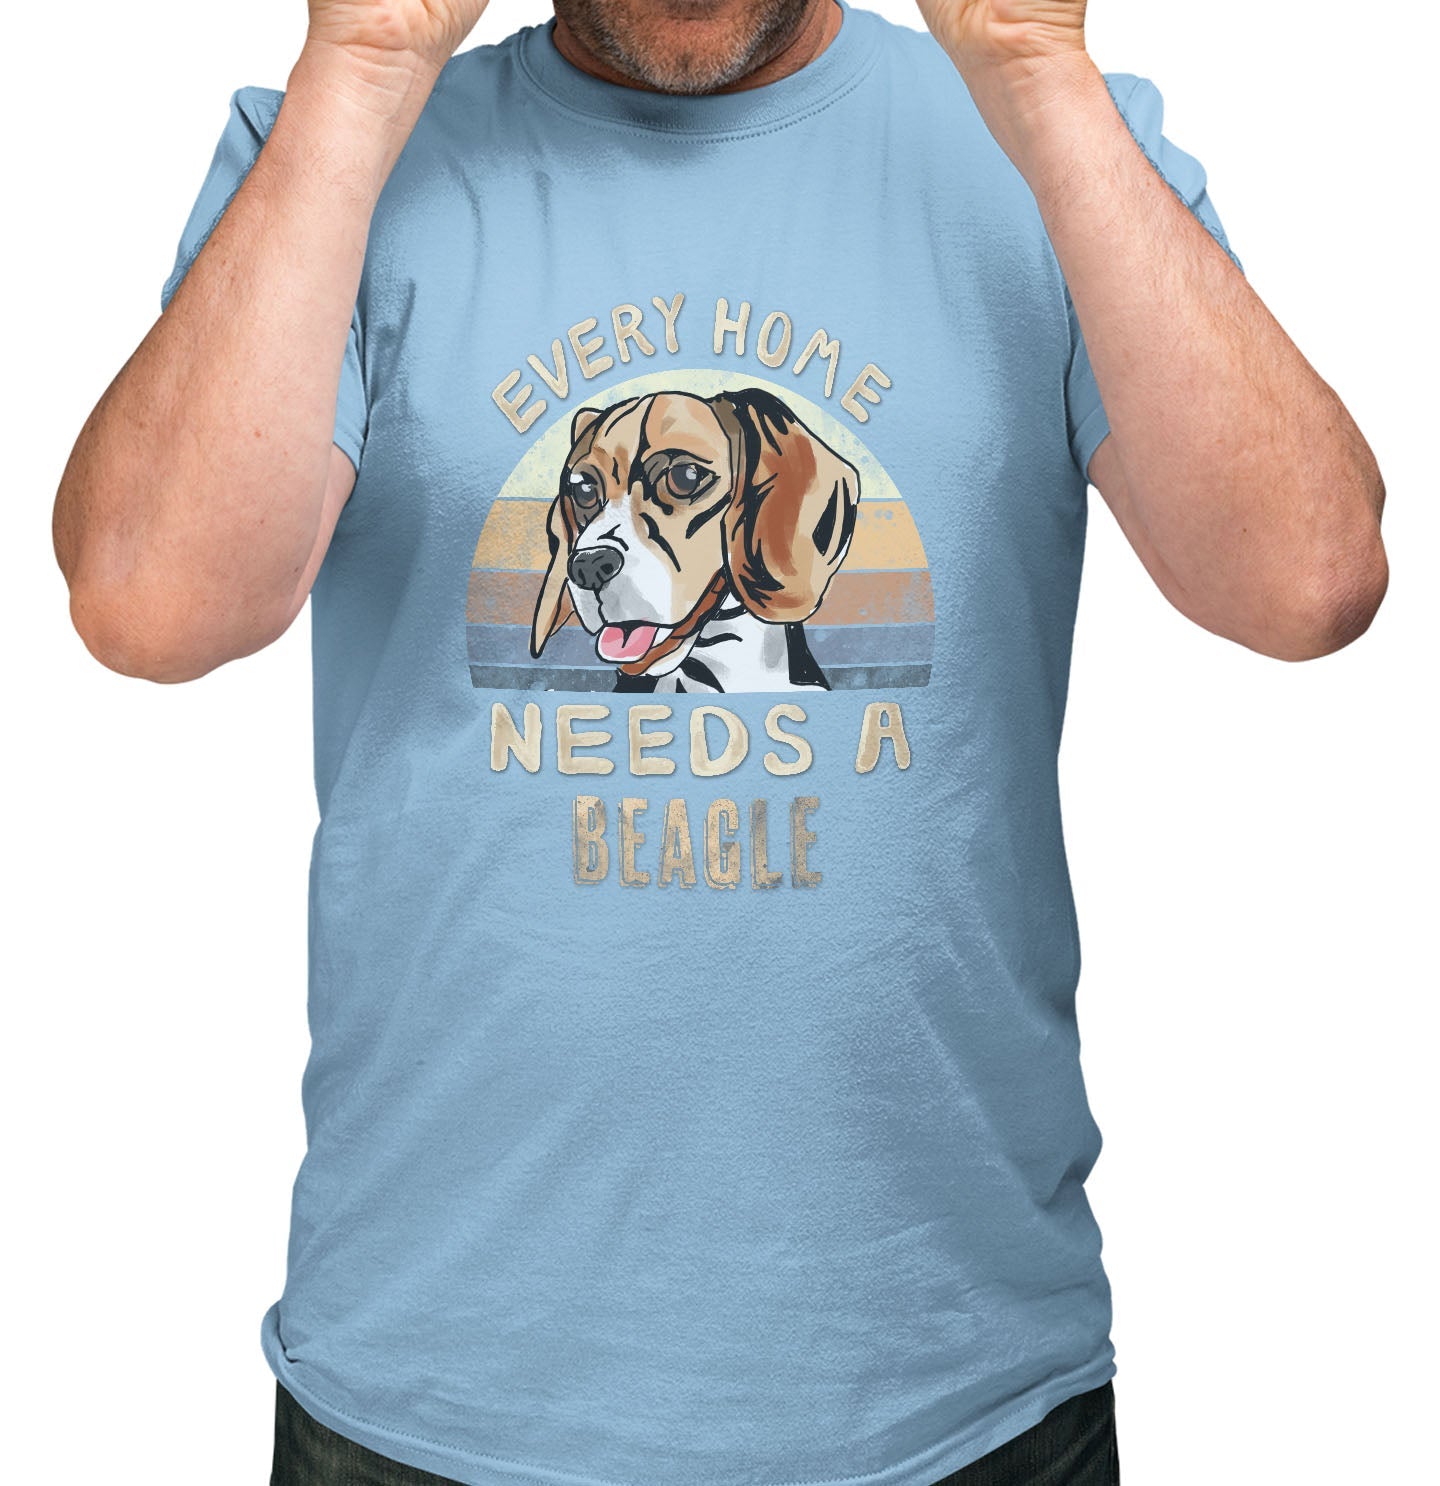 Every Home Needs a Beagle - Adult Unisex T-Shirt